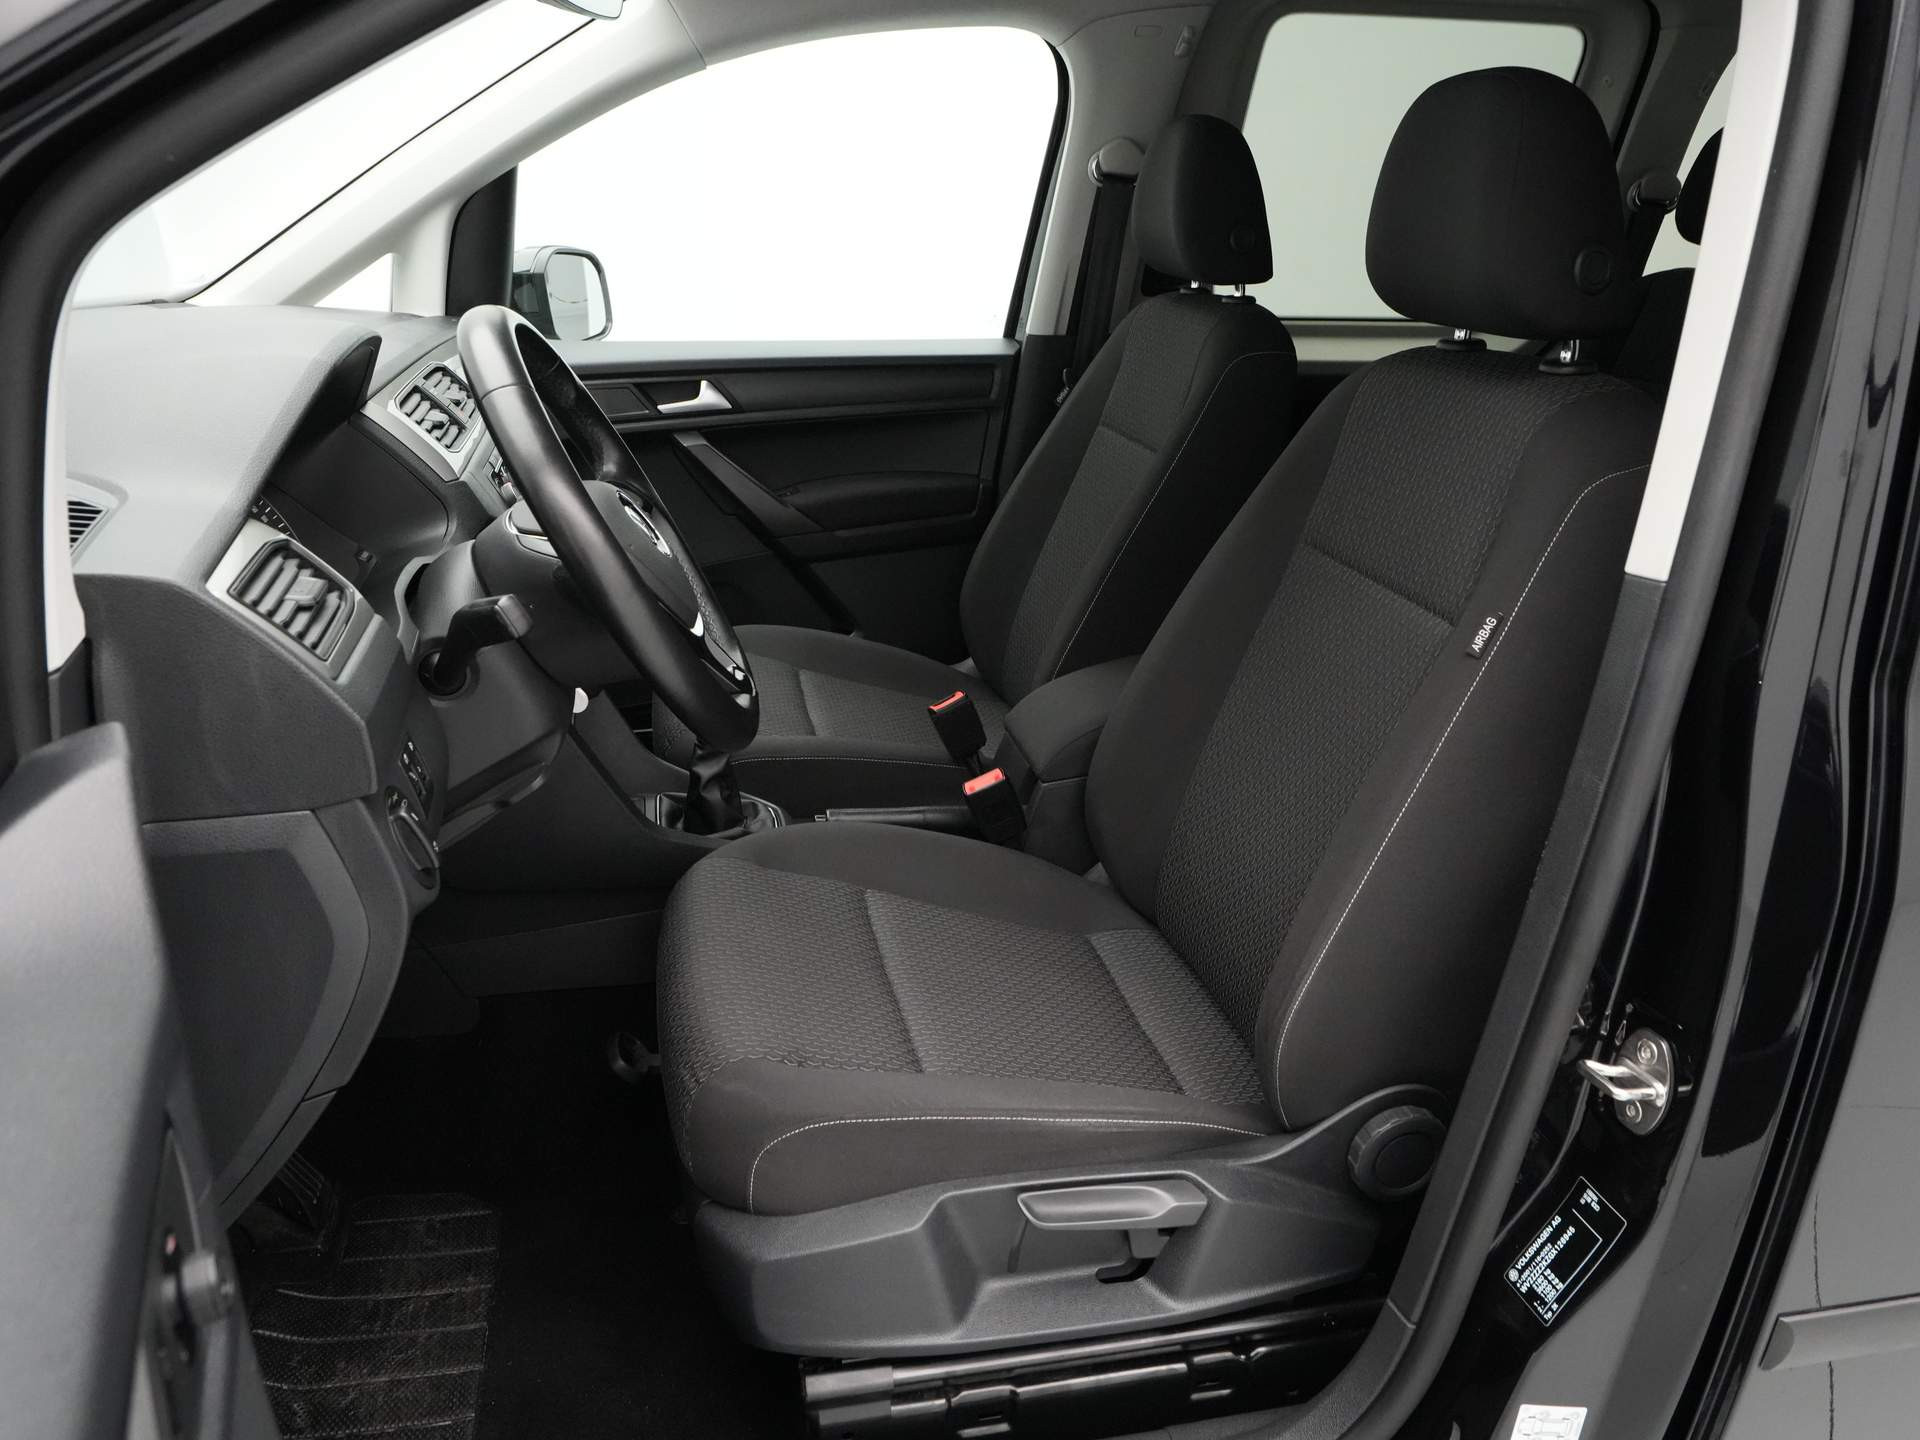 Volkswagen - Caddy 1.4 TSI 125pk Trendline - 2016